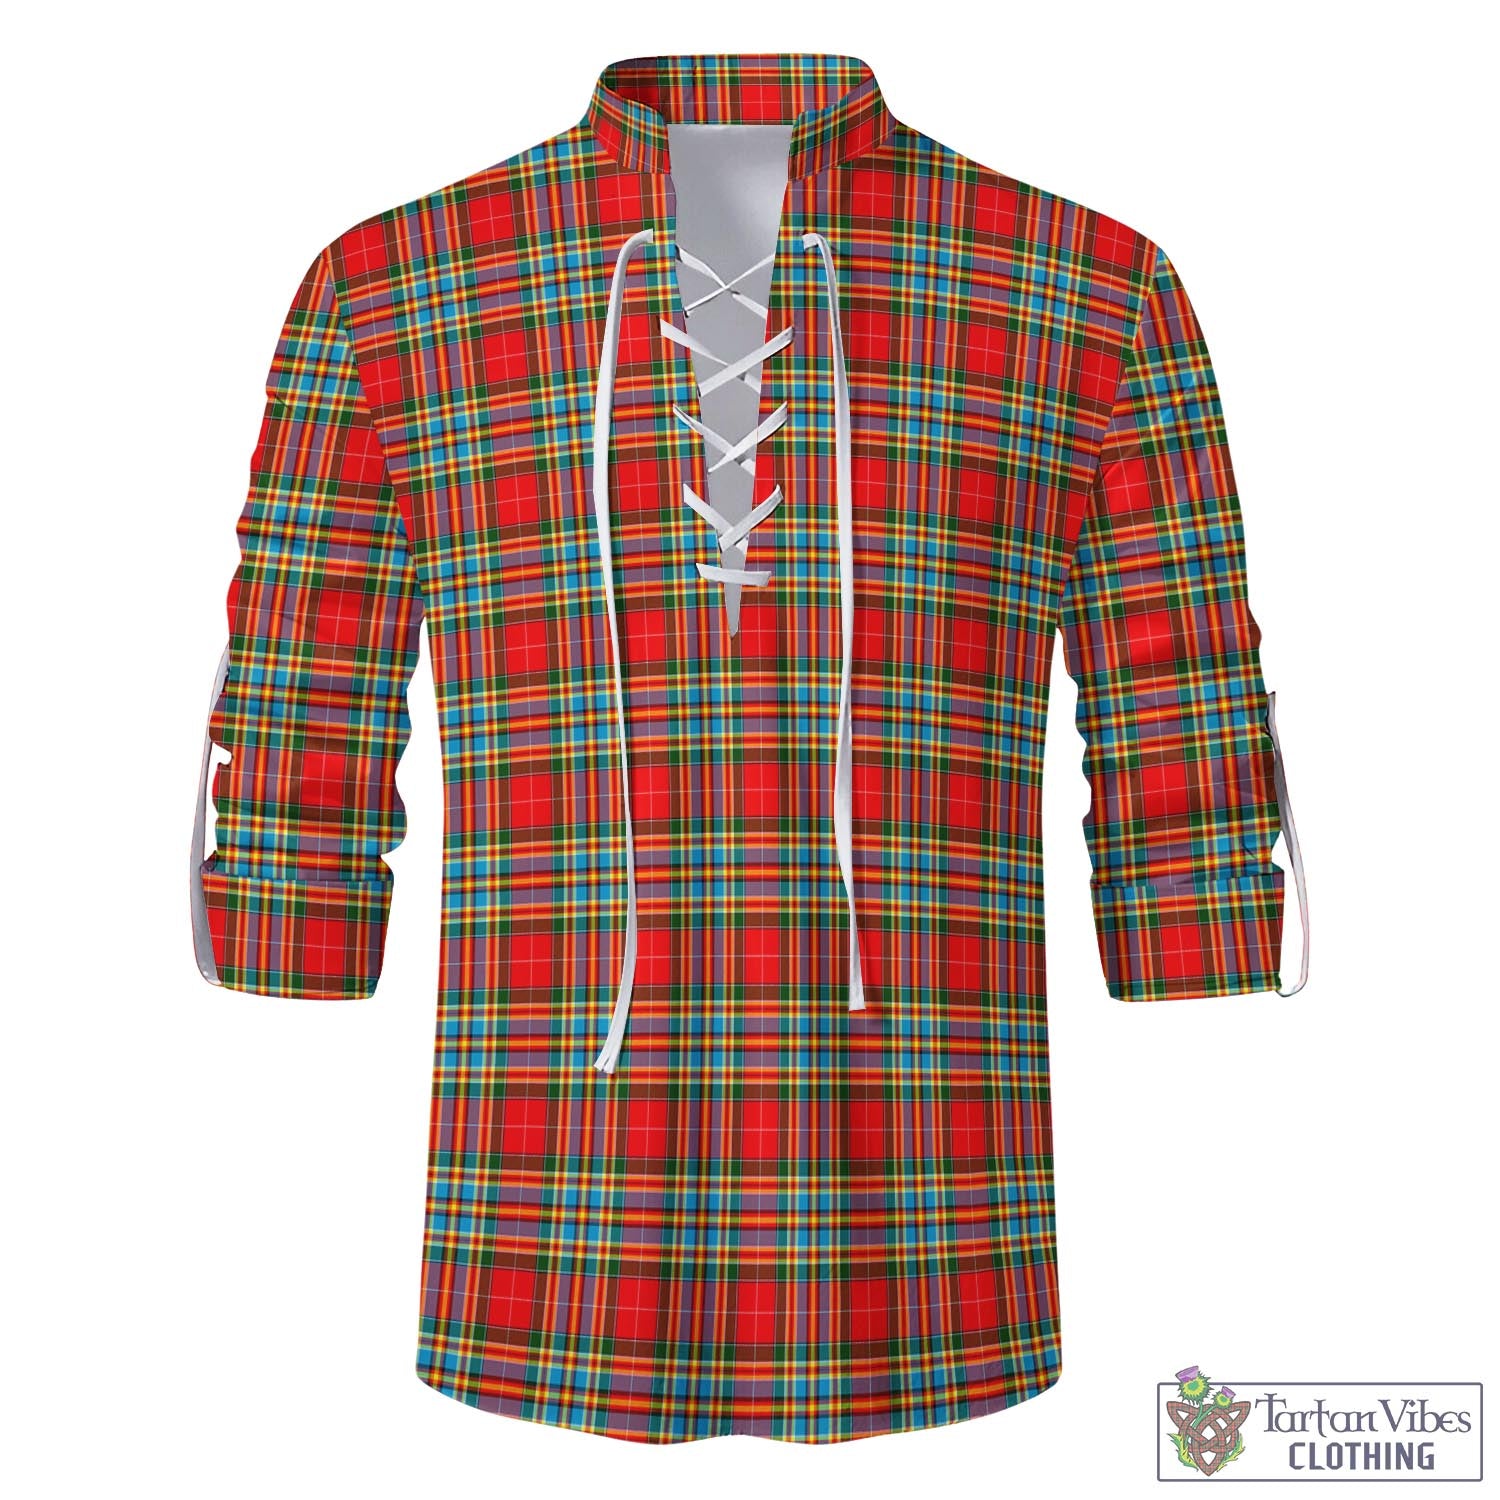 Tartan Vibes Clothing Chattan Tartan Men's Scottish Traditional Jacobite Ghillie Kilt Shirt